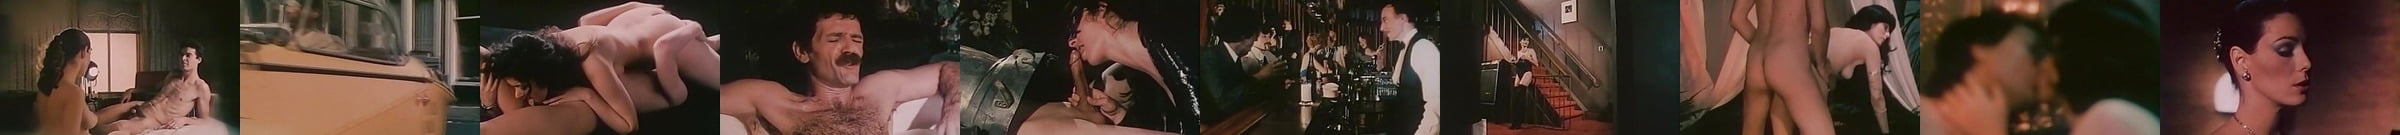 Annette Haven Free Porn Star Hd Videos 86 Xhamster